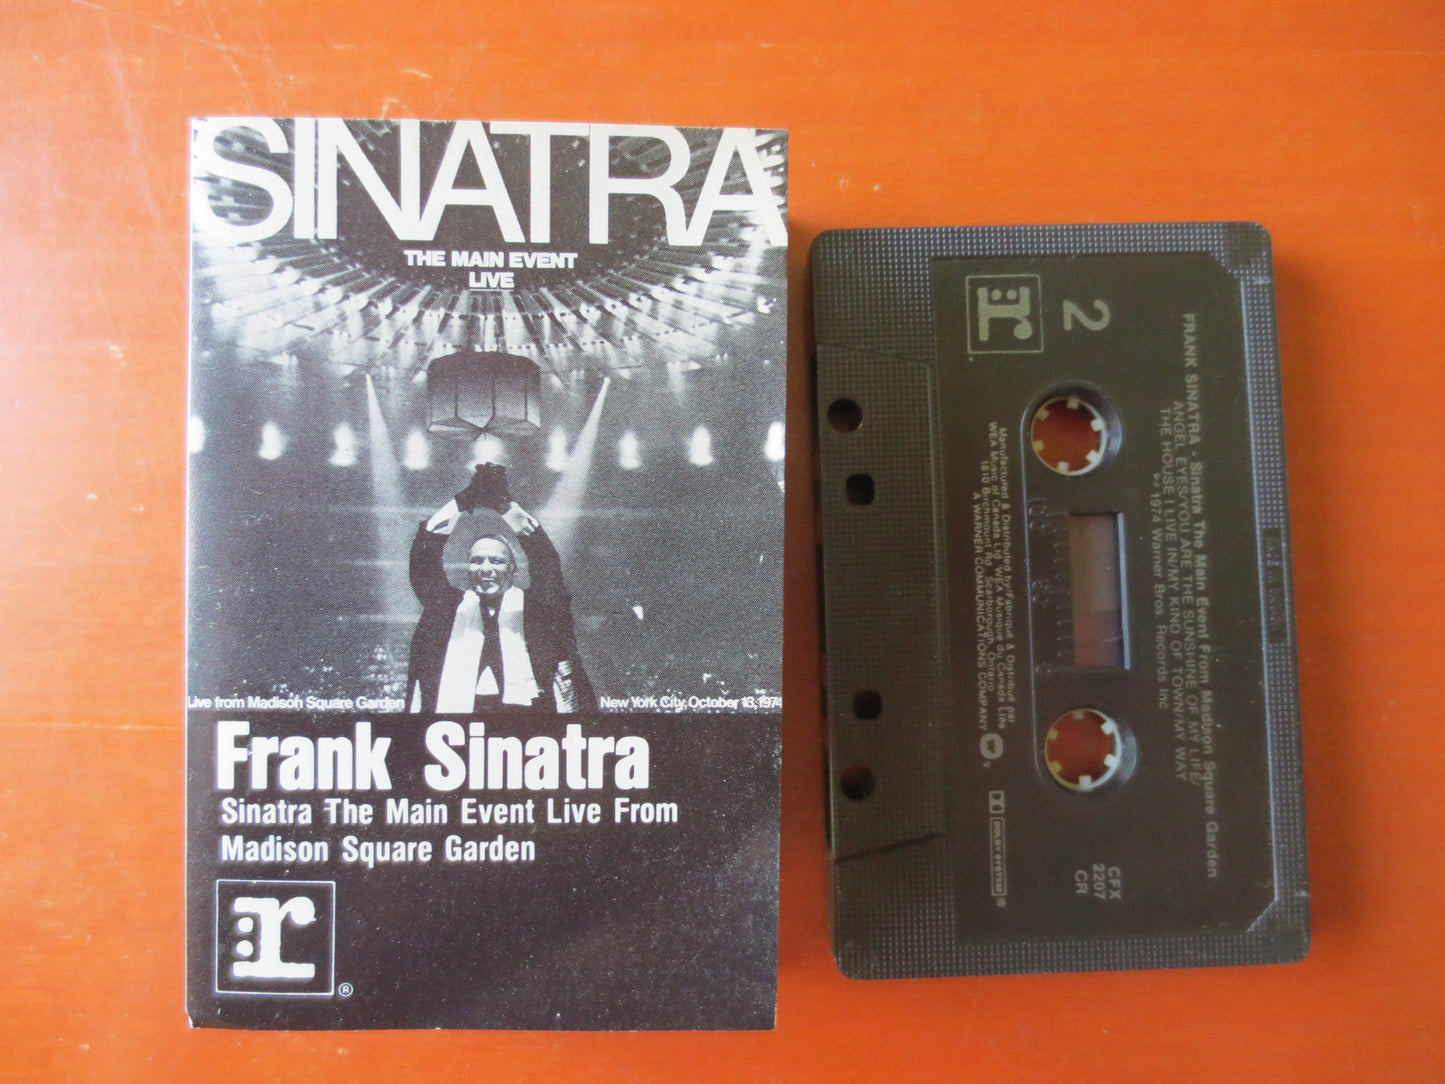 FRANK SINATRA, The Main EVENT, Frank Sinatra Tape, Frank Sinatra Album, Tape Cassette, Jazz Tapes, Cassette, Jazz Cassette